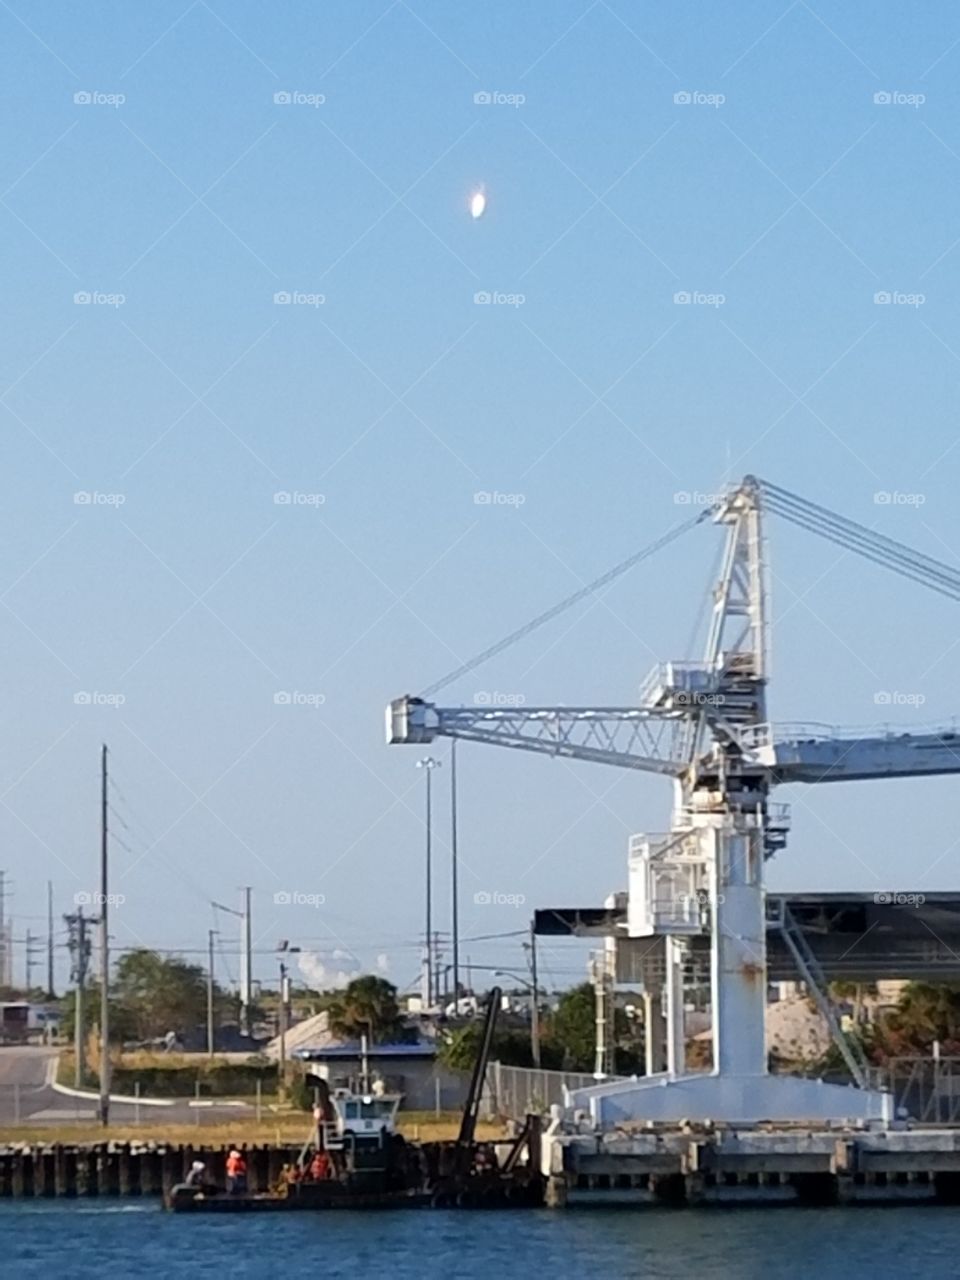 Rocket Launch at Cape Canaveral, FL